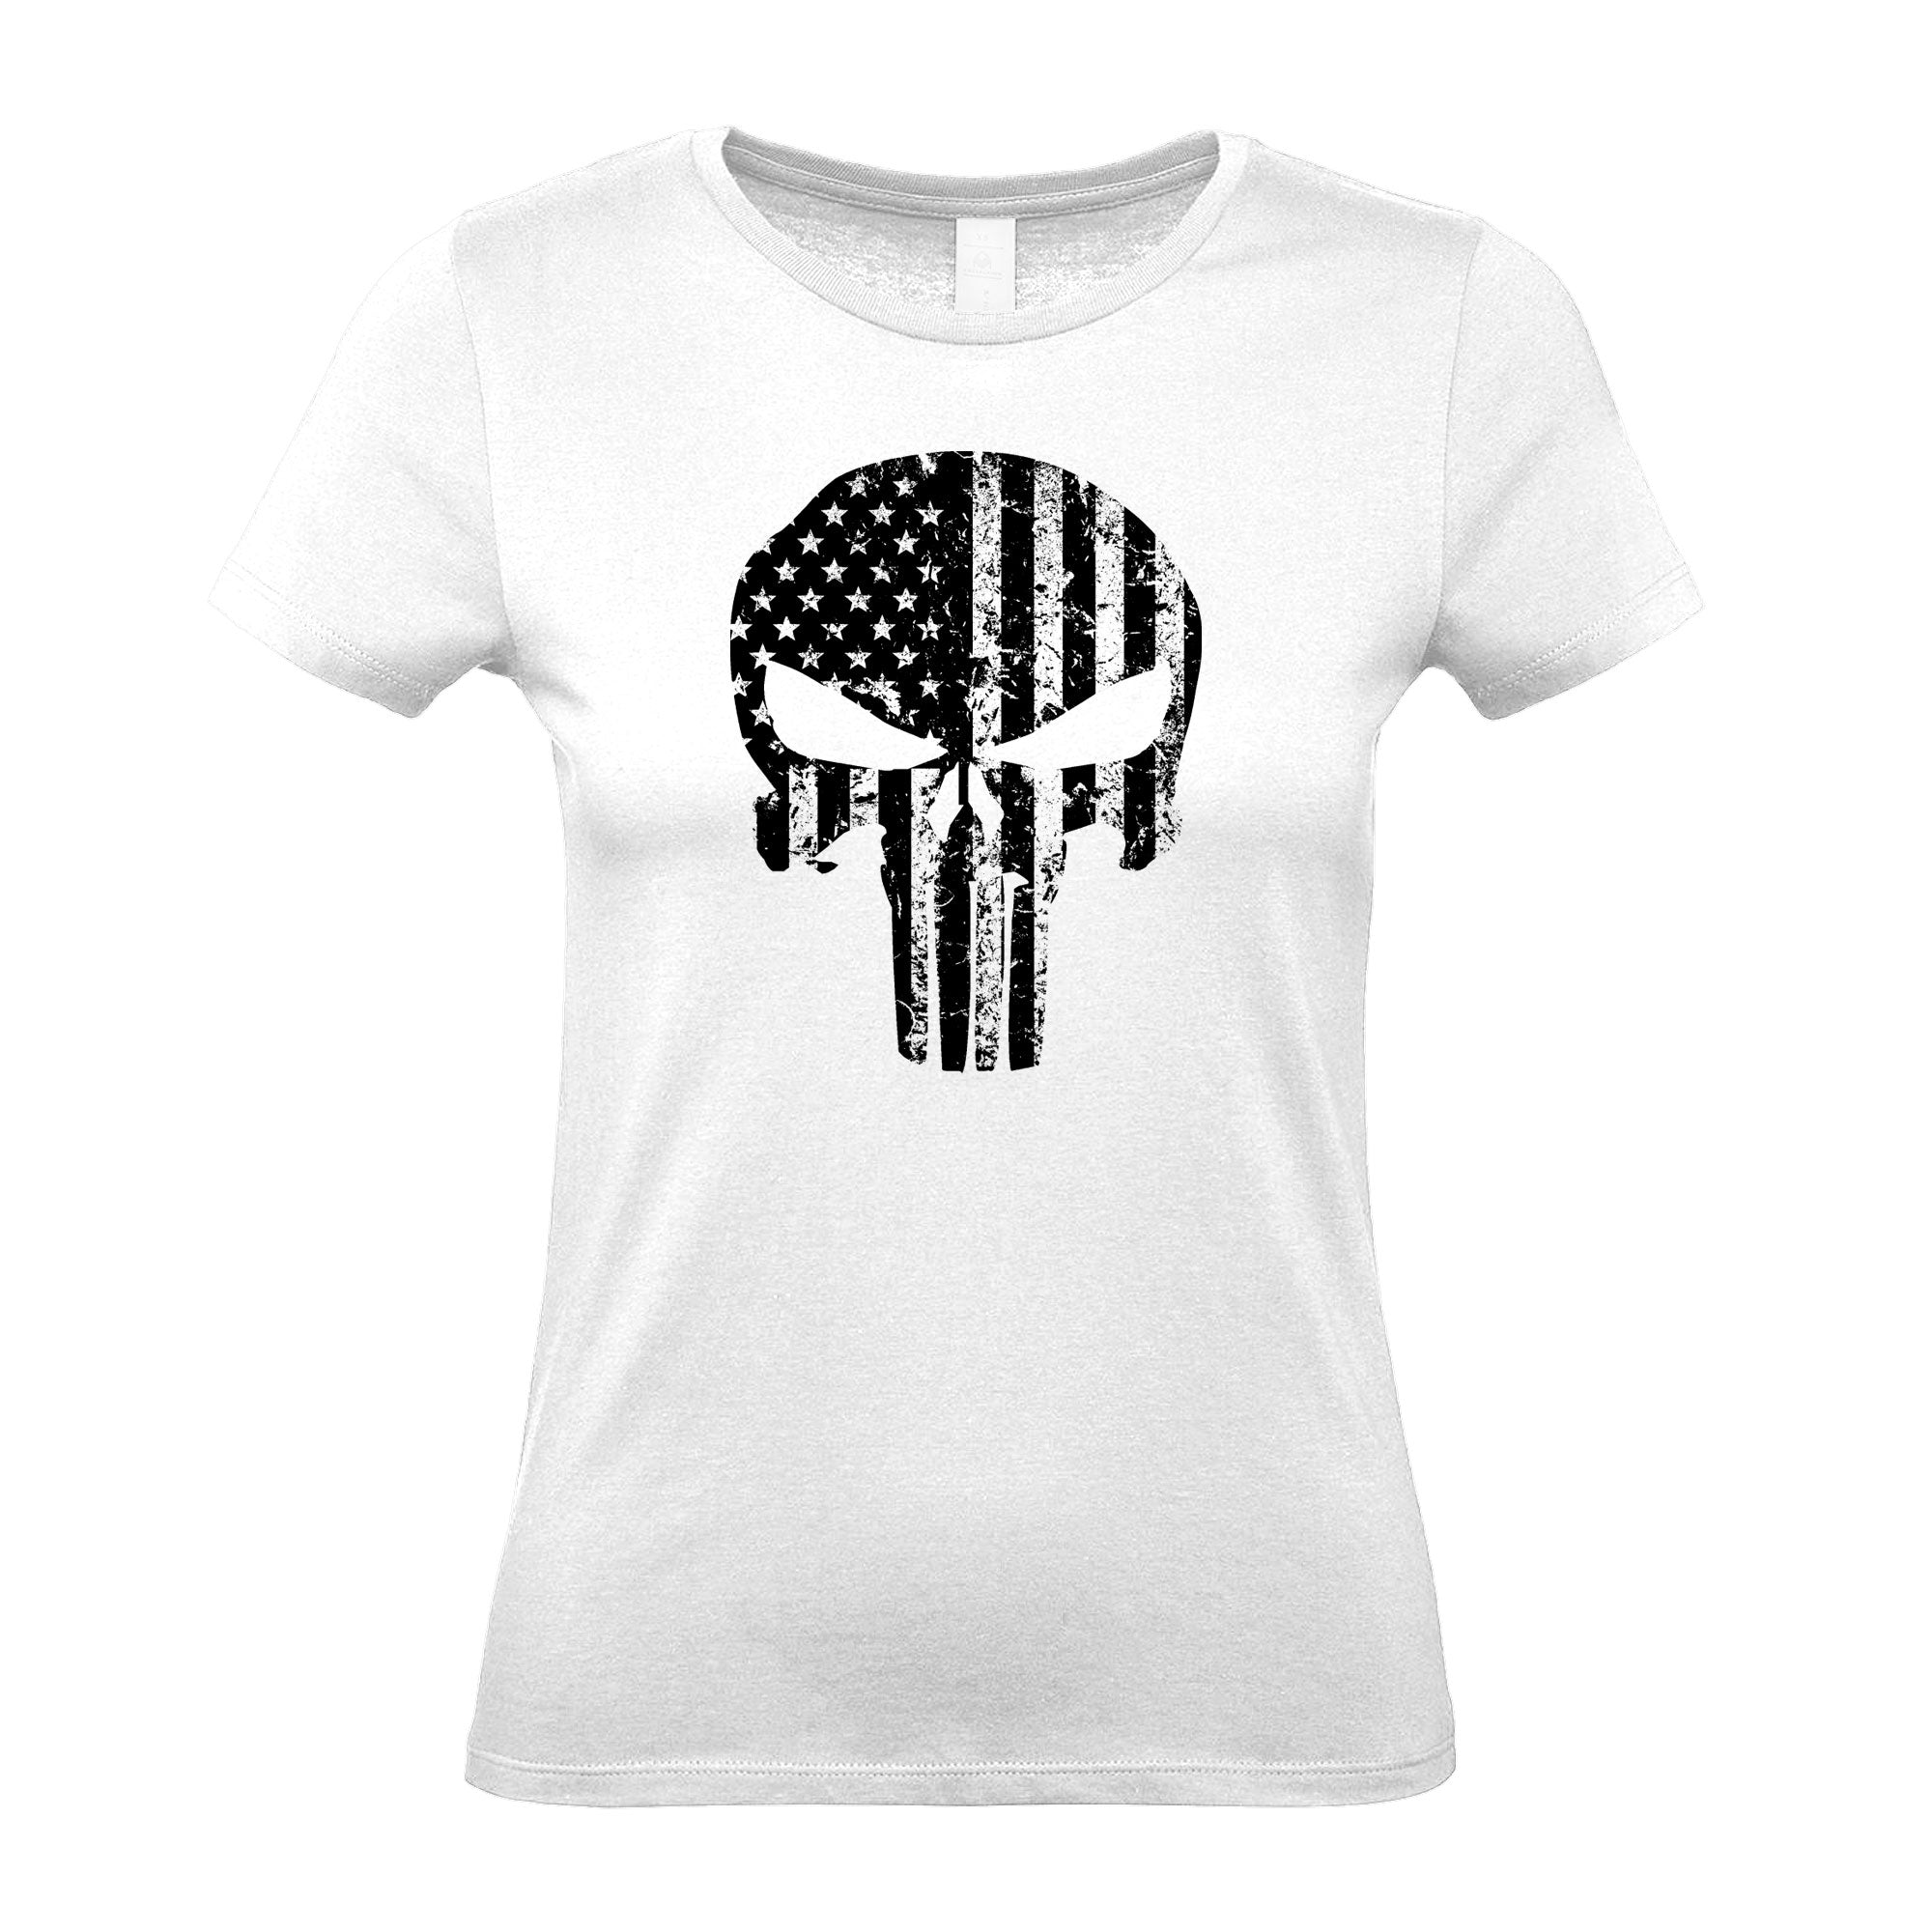 Punisher USA - Women's Gym T-Shirt